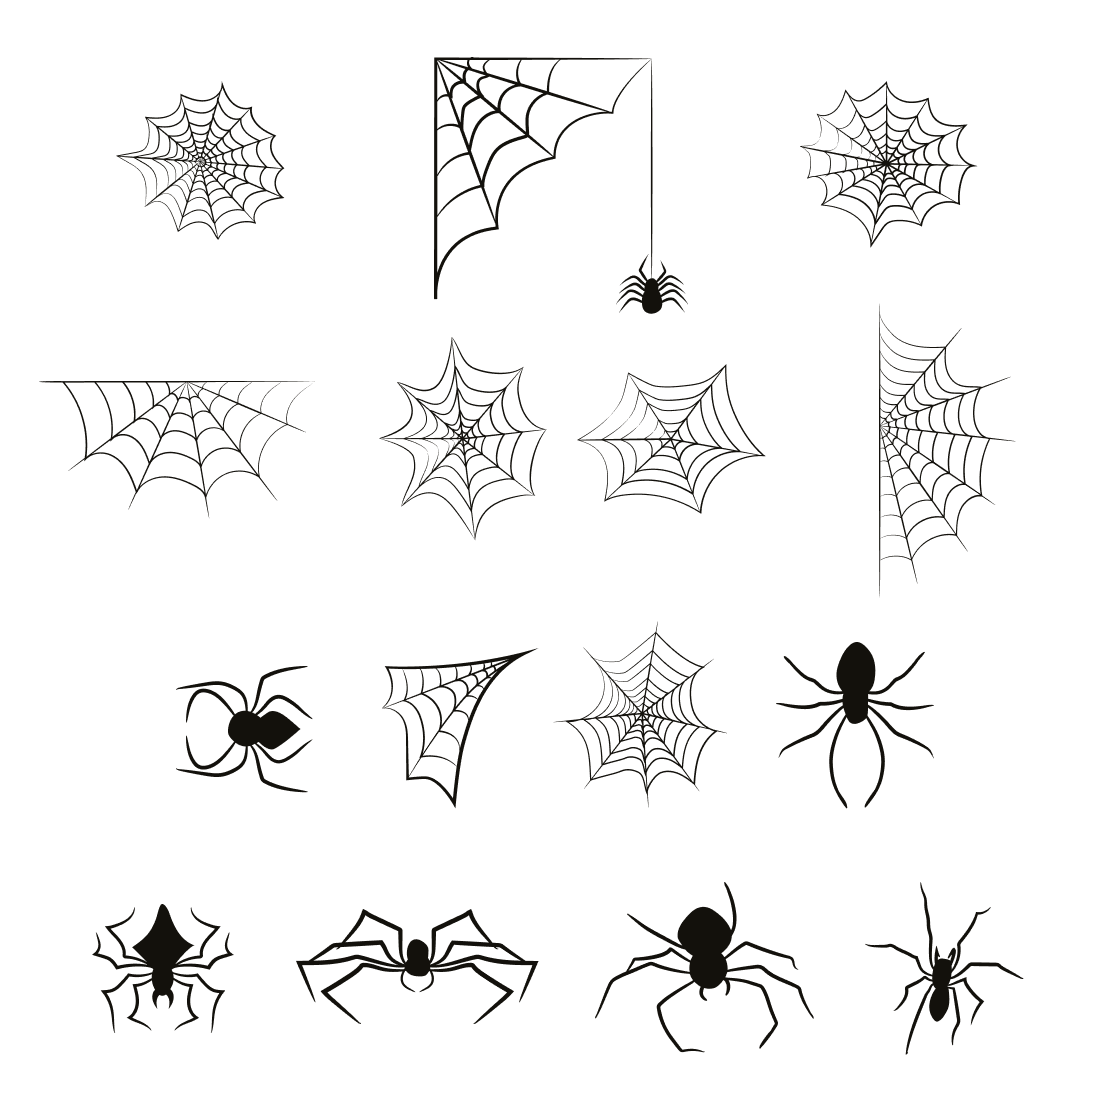 corner spider web clipart black and white